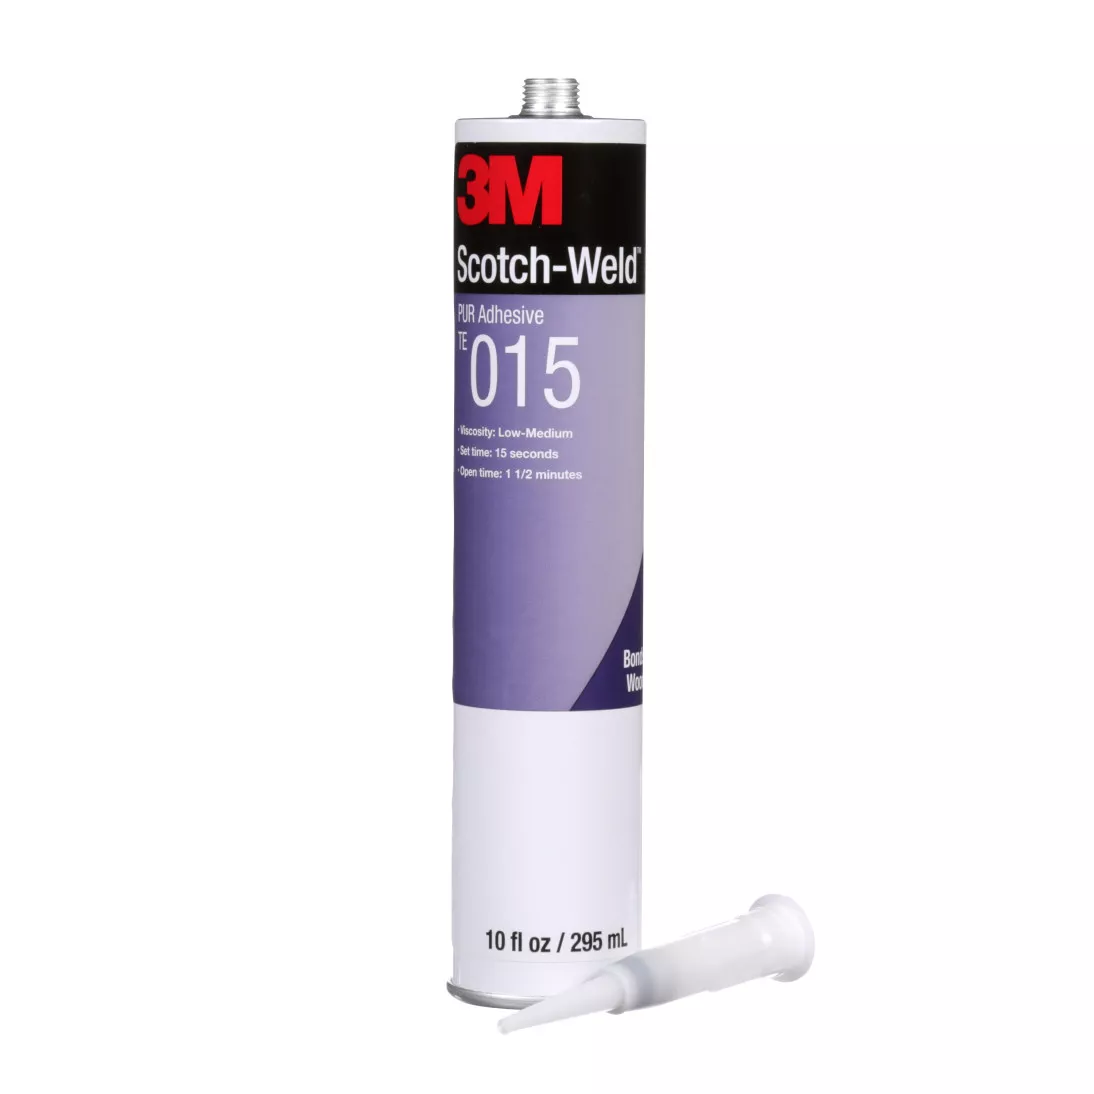 3M™ Scotch-Weld™ Polyurethane Reactive Adhesive TE015, Off-White, 1/10
Gallon Cartidge, 5/Case